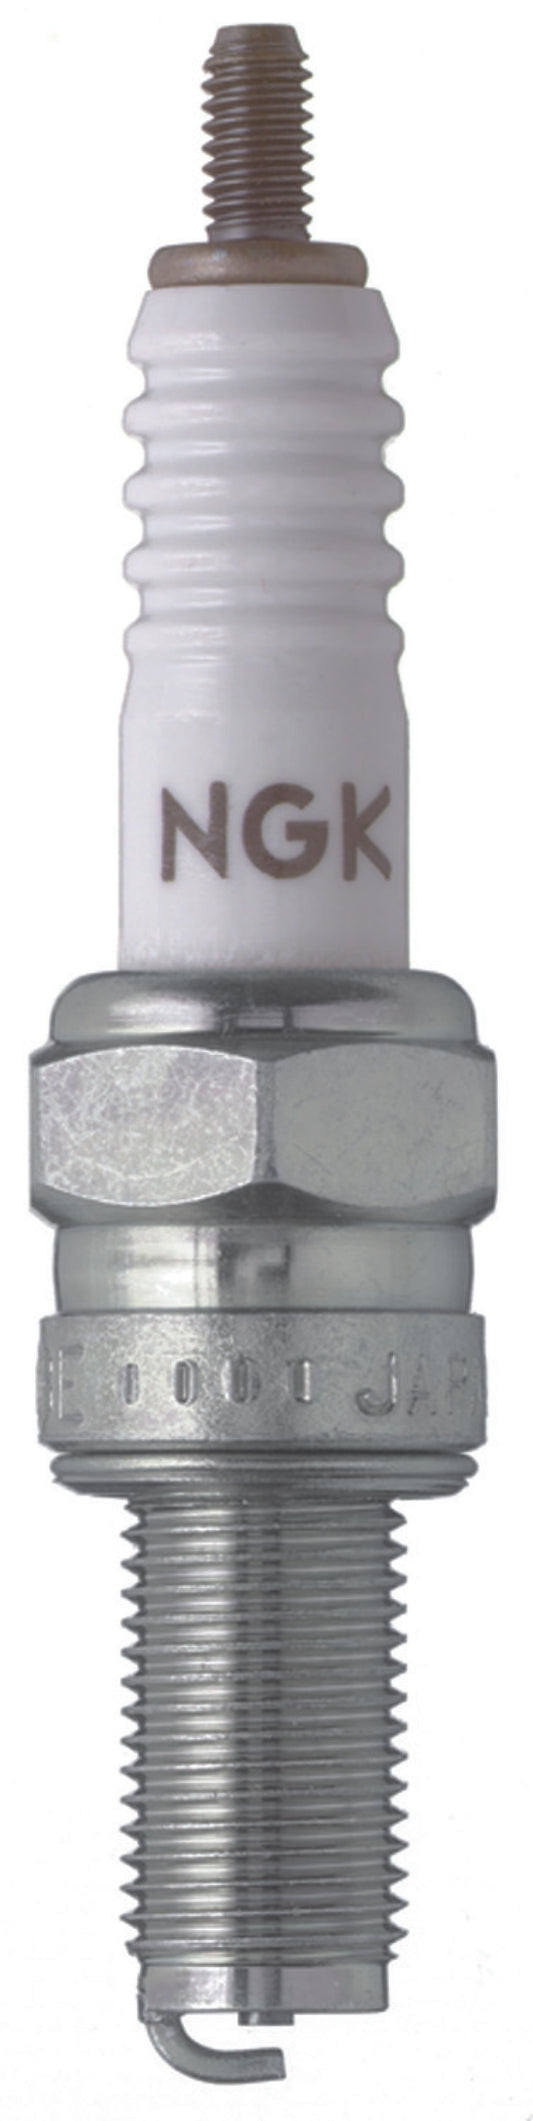 NGK Standard Spark Plug Box of 4 (C9E)